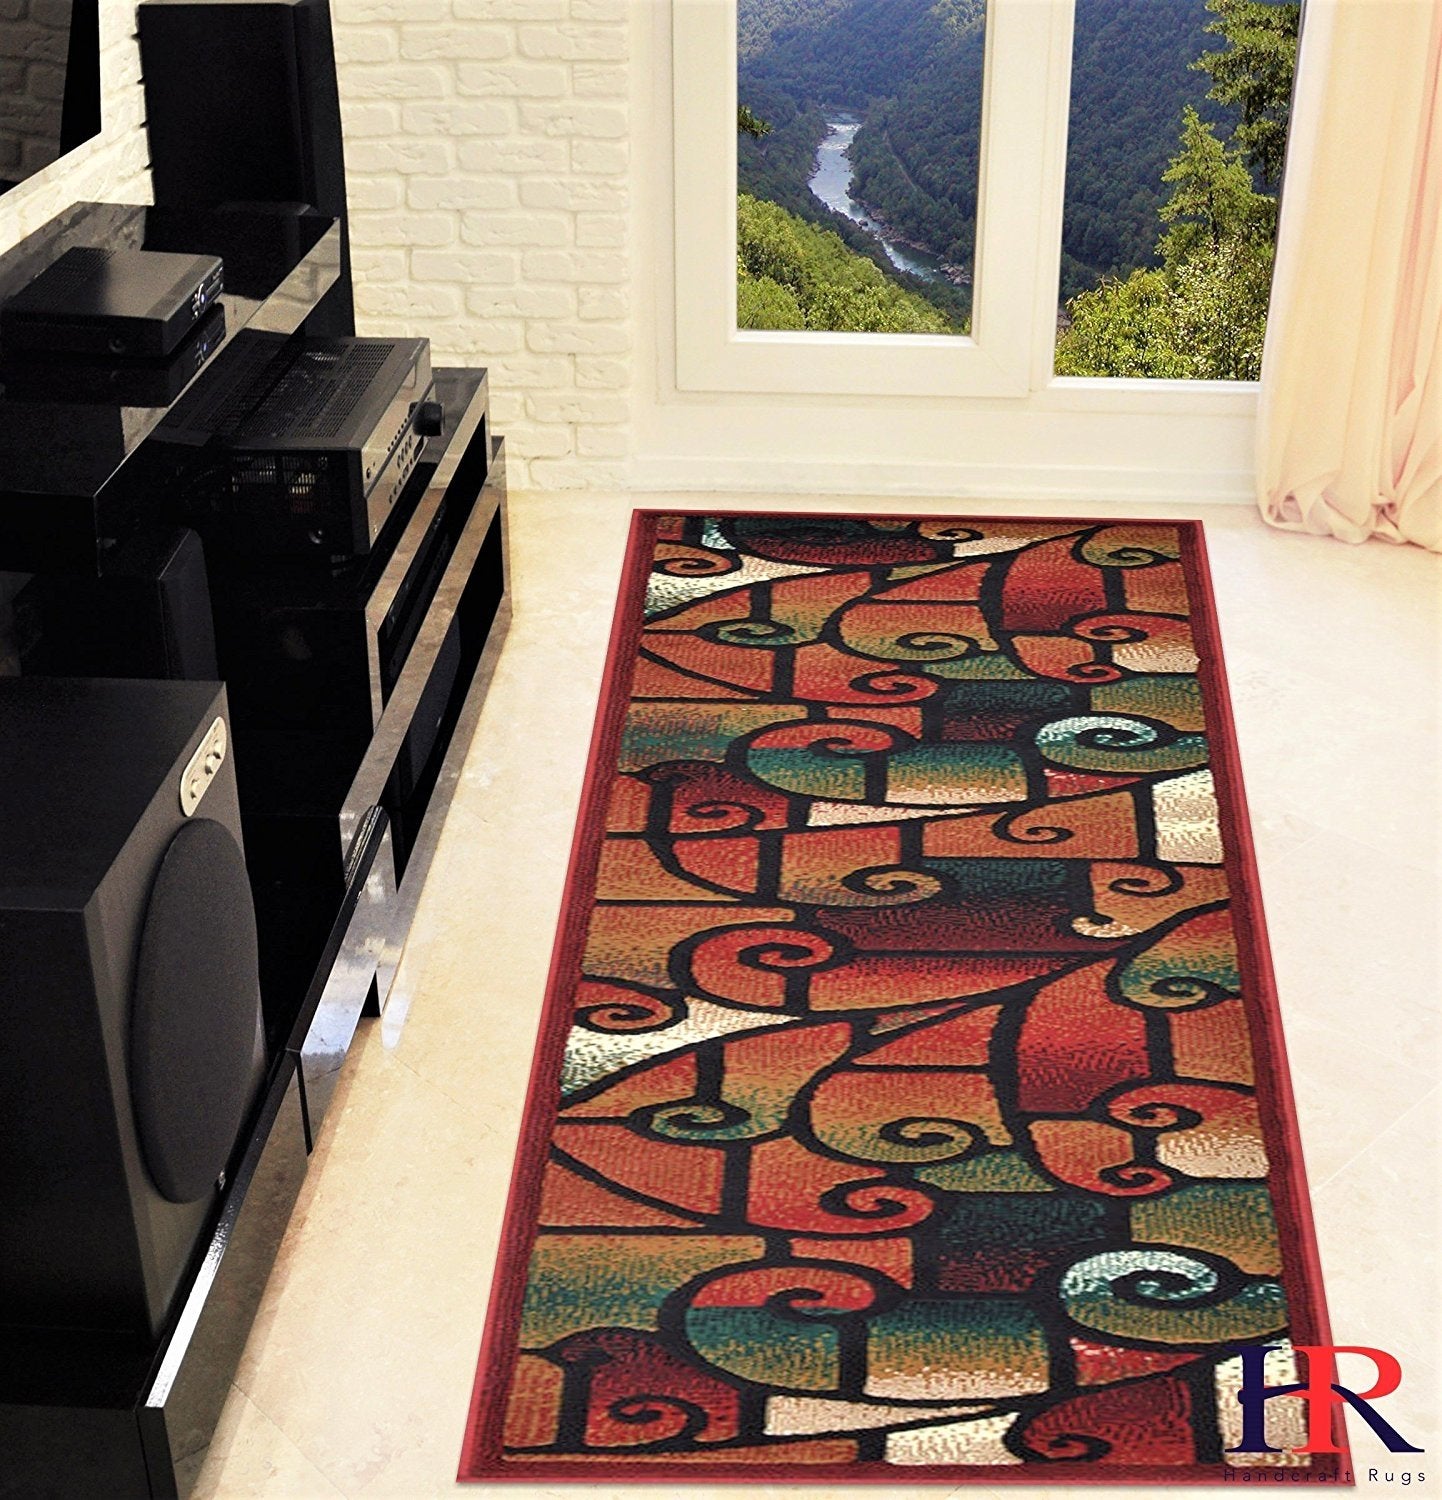 HR-Modern Contemporary Living Room Rugs-Abstract, Geometric Swirls Pattern-Red/Black/Sage/Beige/Multi (2'x7')